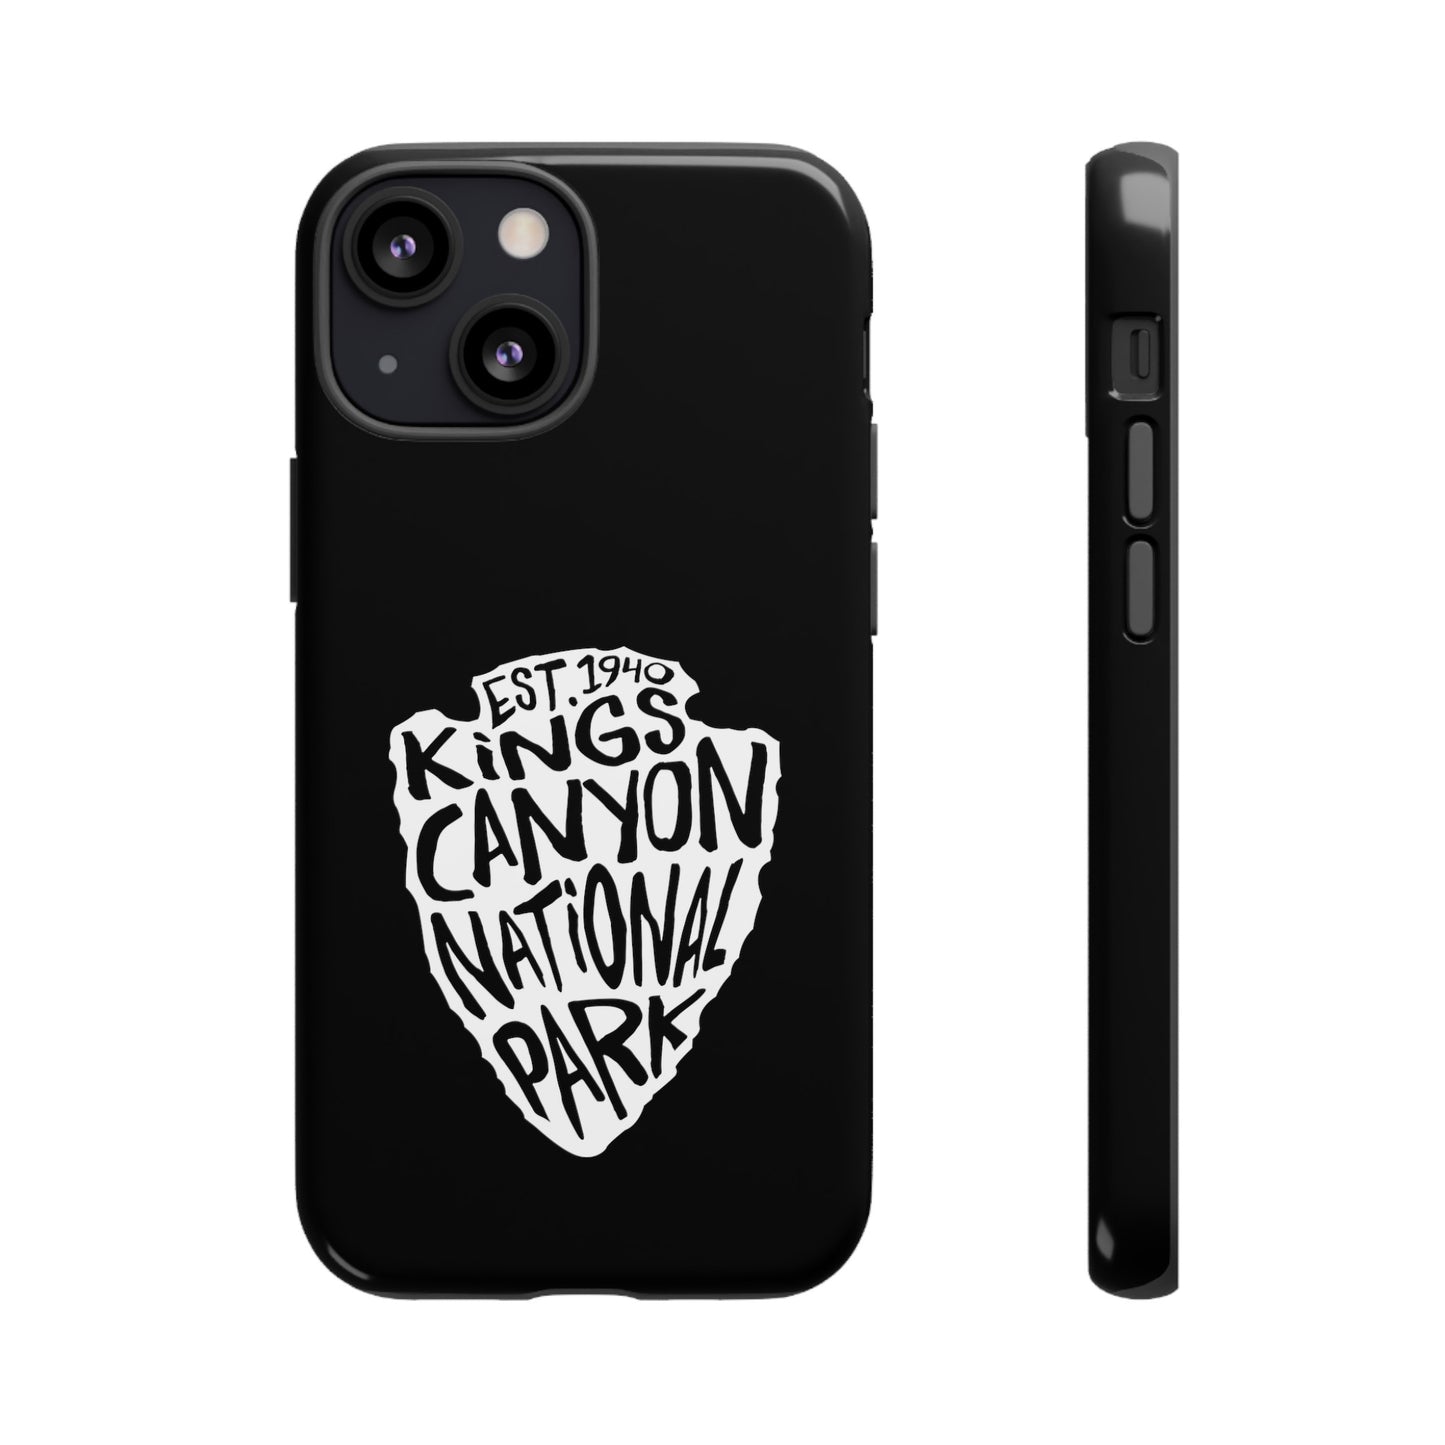 Kings Canyon National Park Phone Case - Arrowhead Design